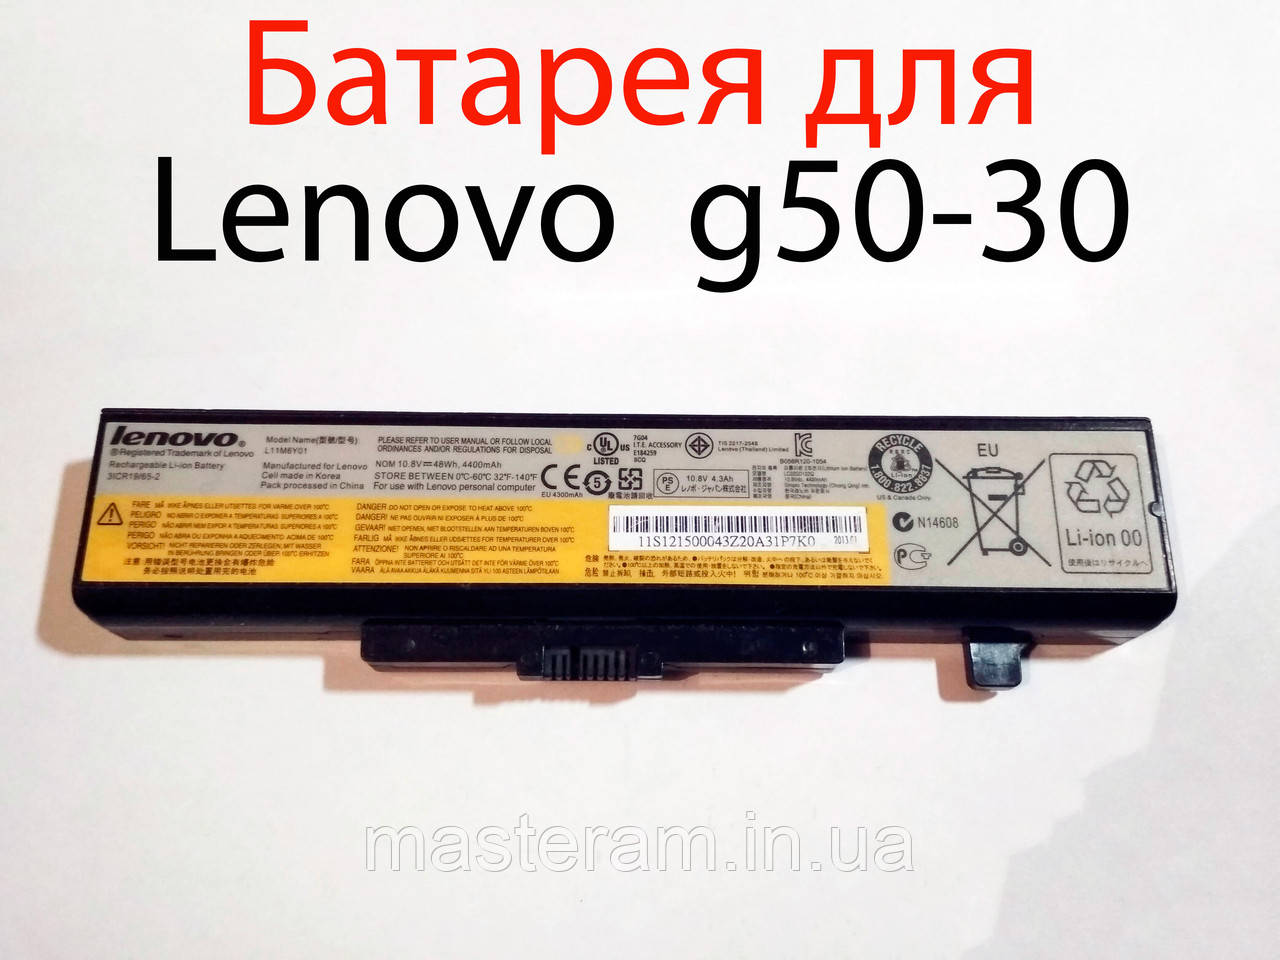 Купить Батарею Для Ноутбука Леново G50 30